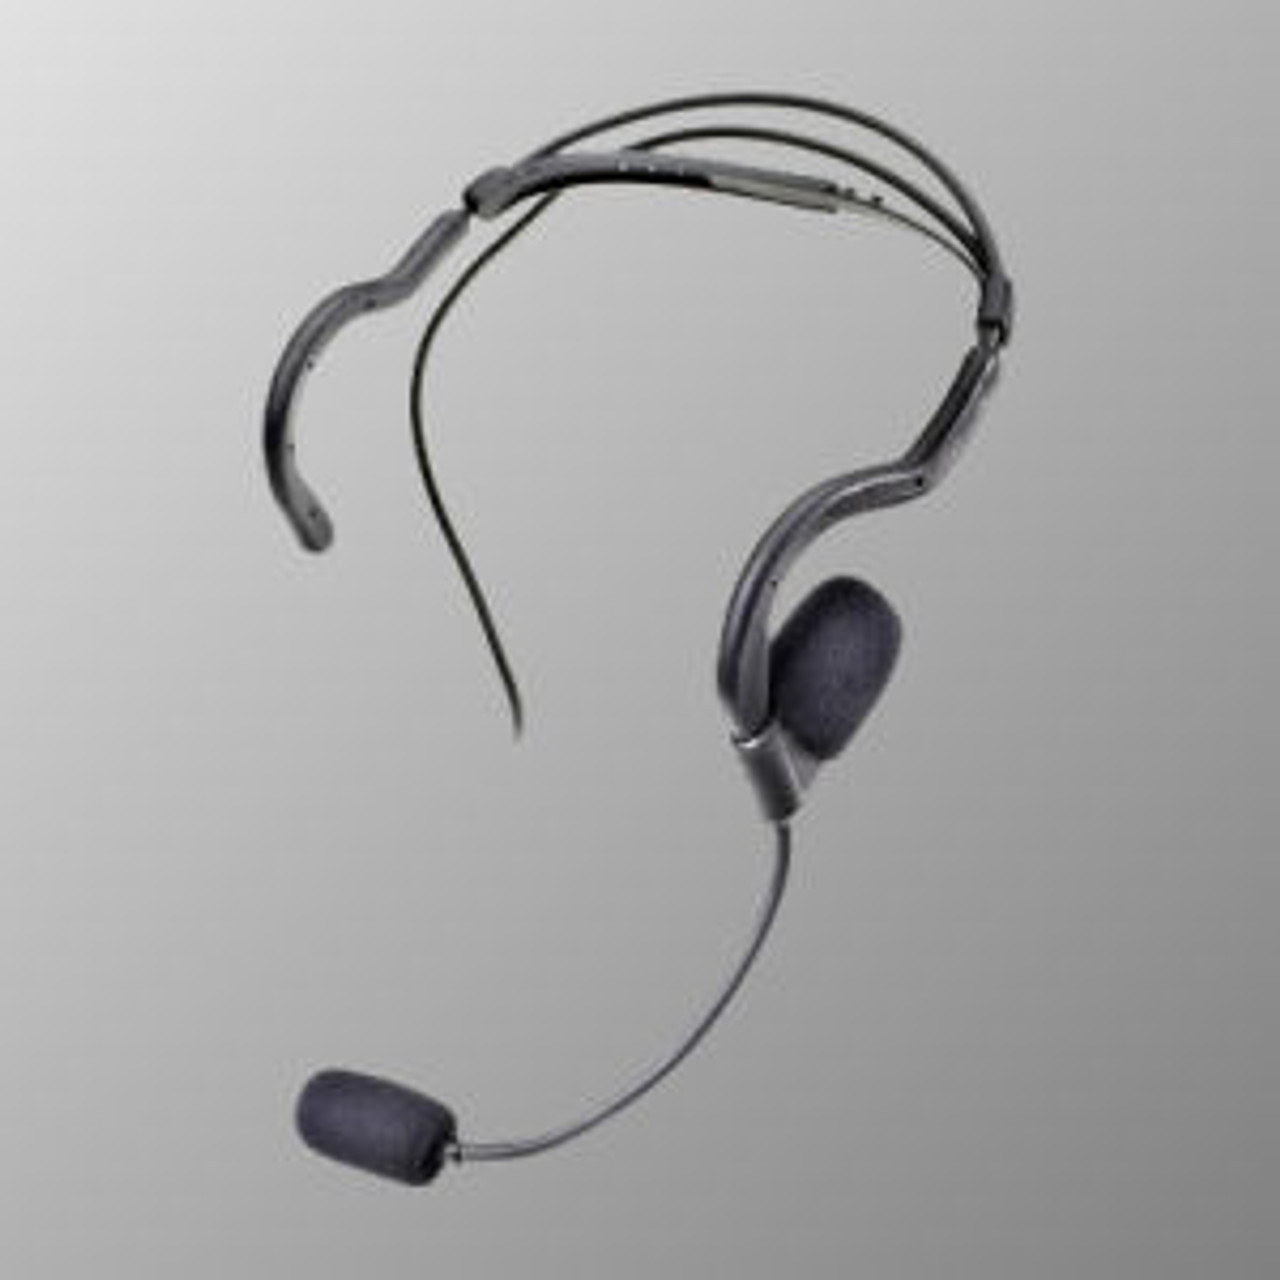 ICOM IC-F11 Tactical Noise Canceling Single Muff Headset